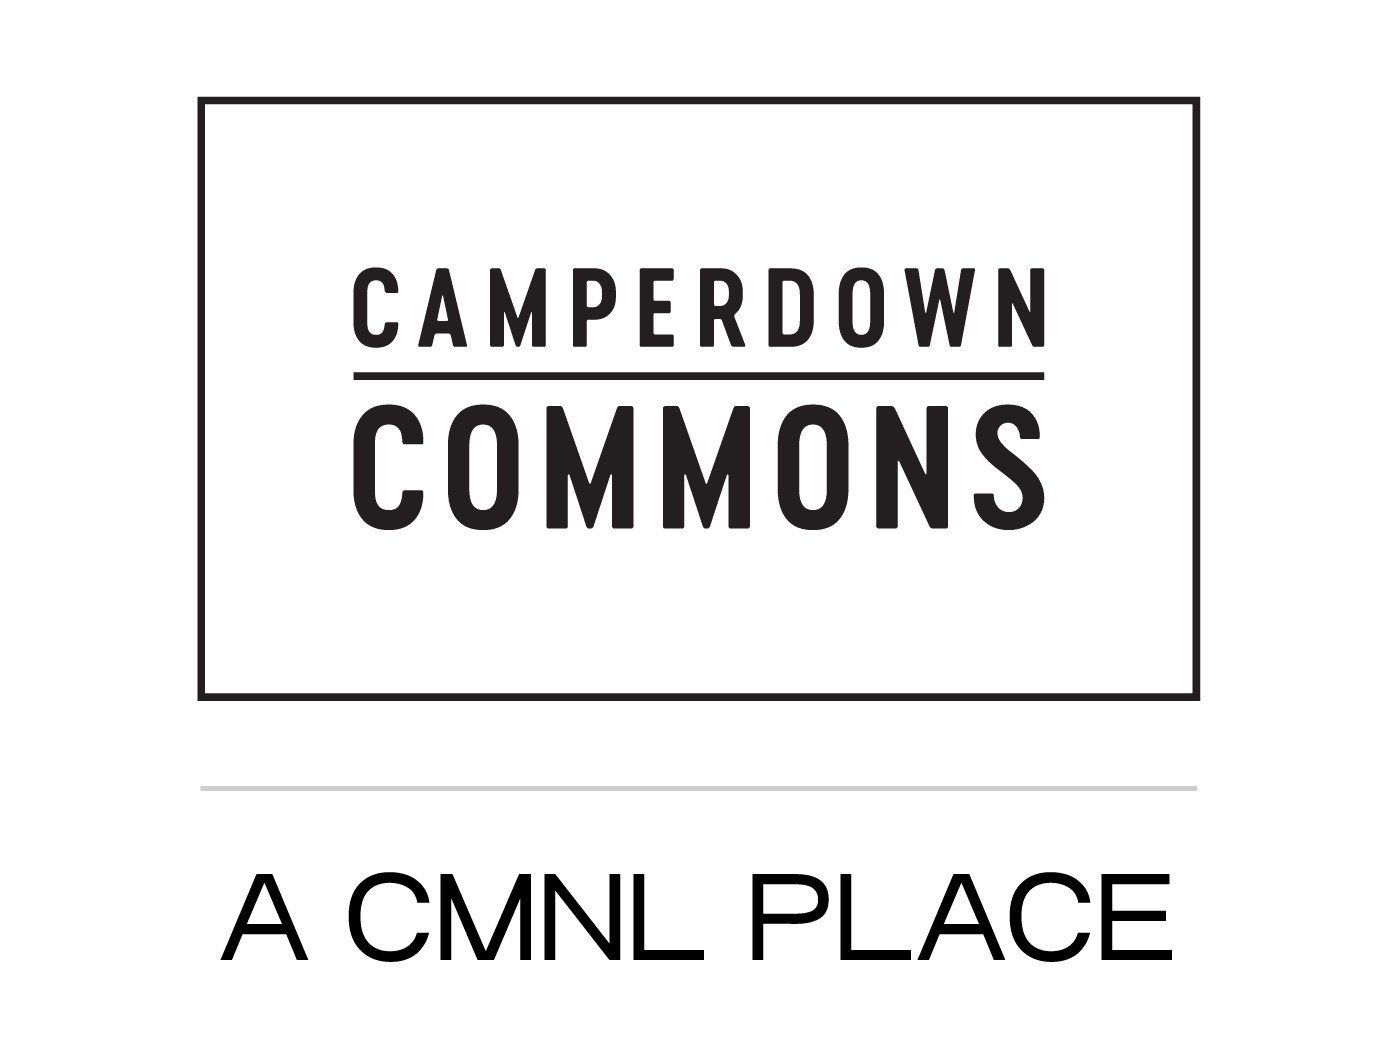 Camperdown Commons